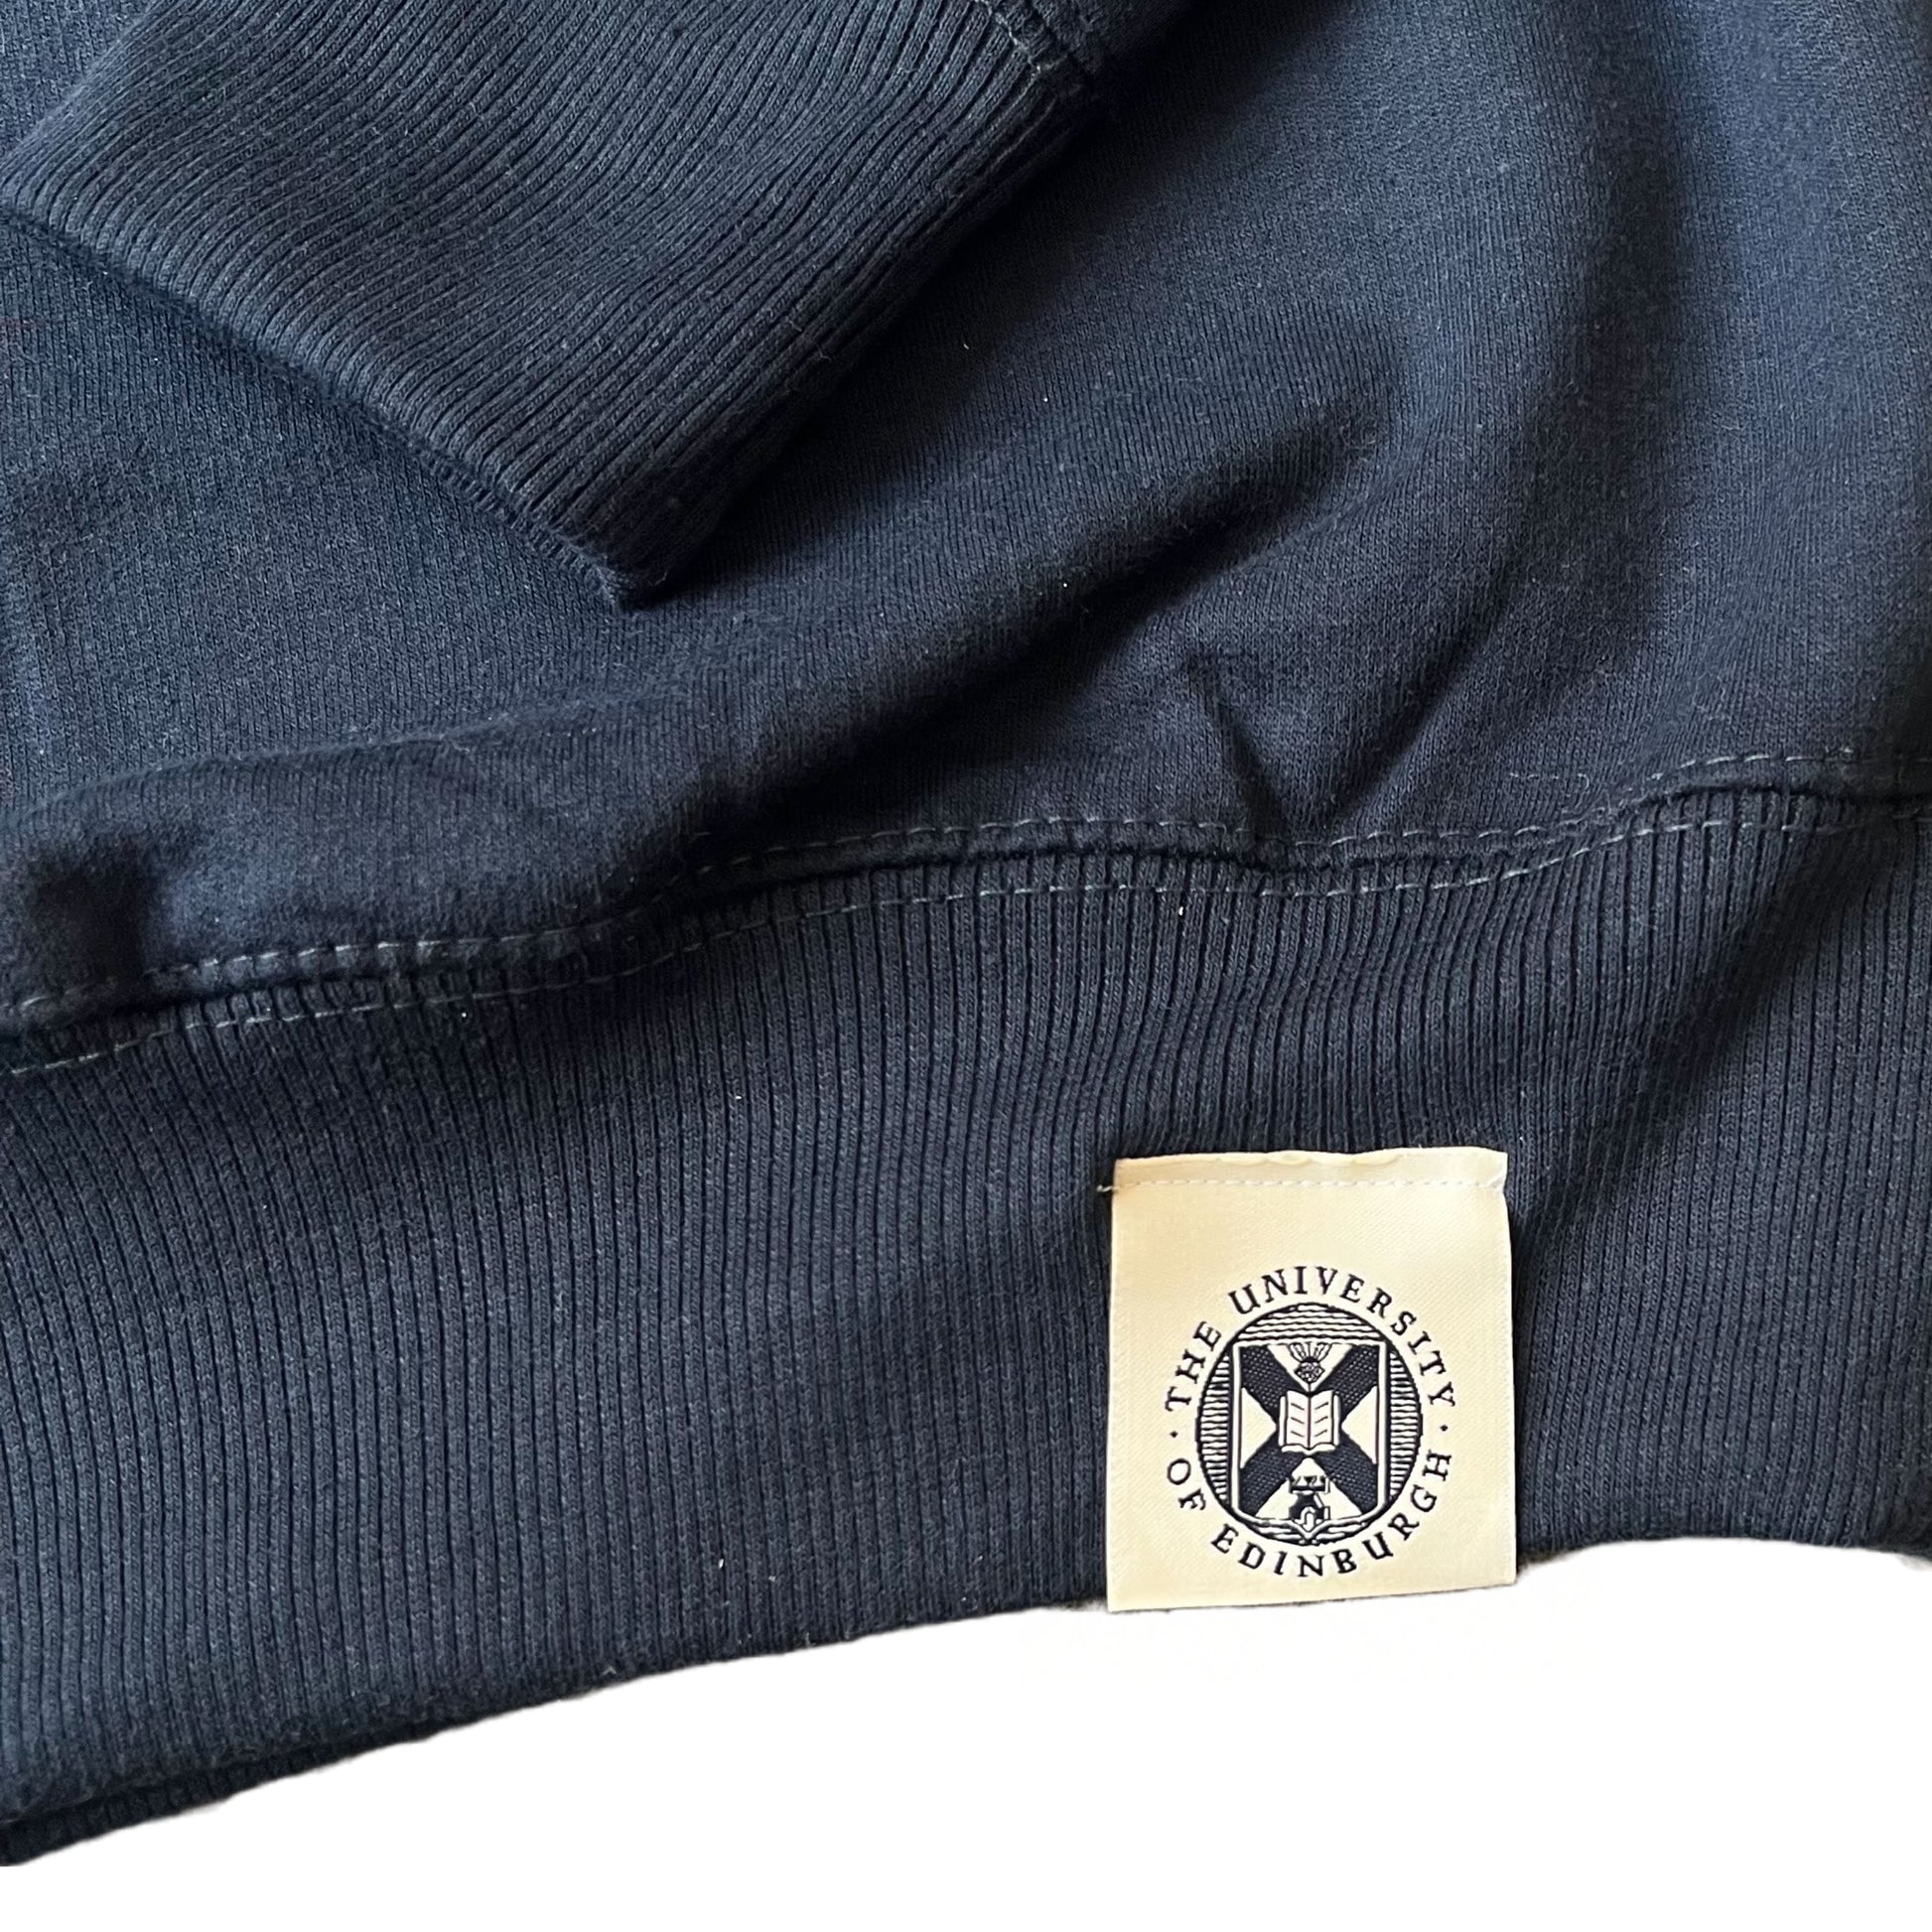 Close up of navy sweatshirt's University of Edinburgh crest stitched on the waistband